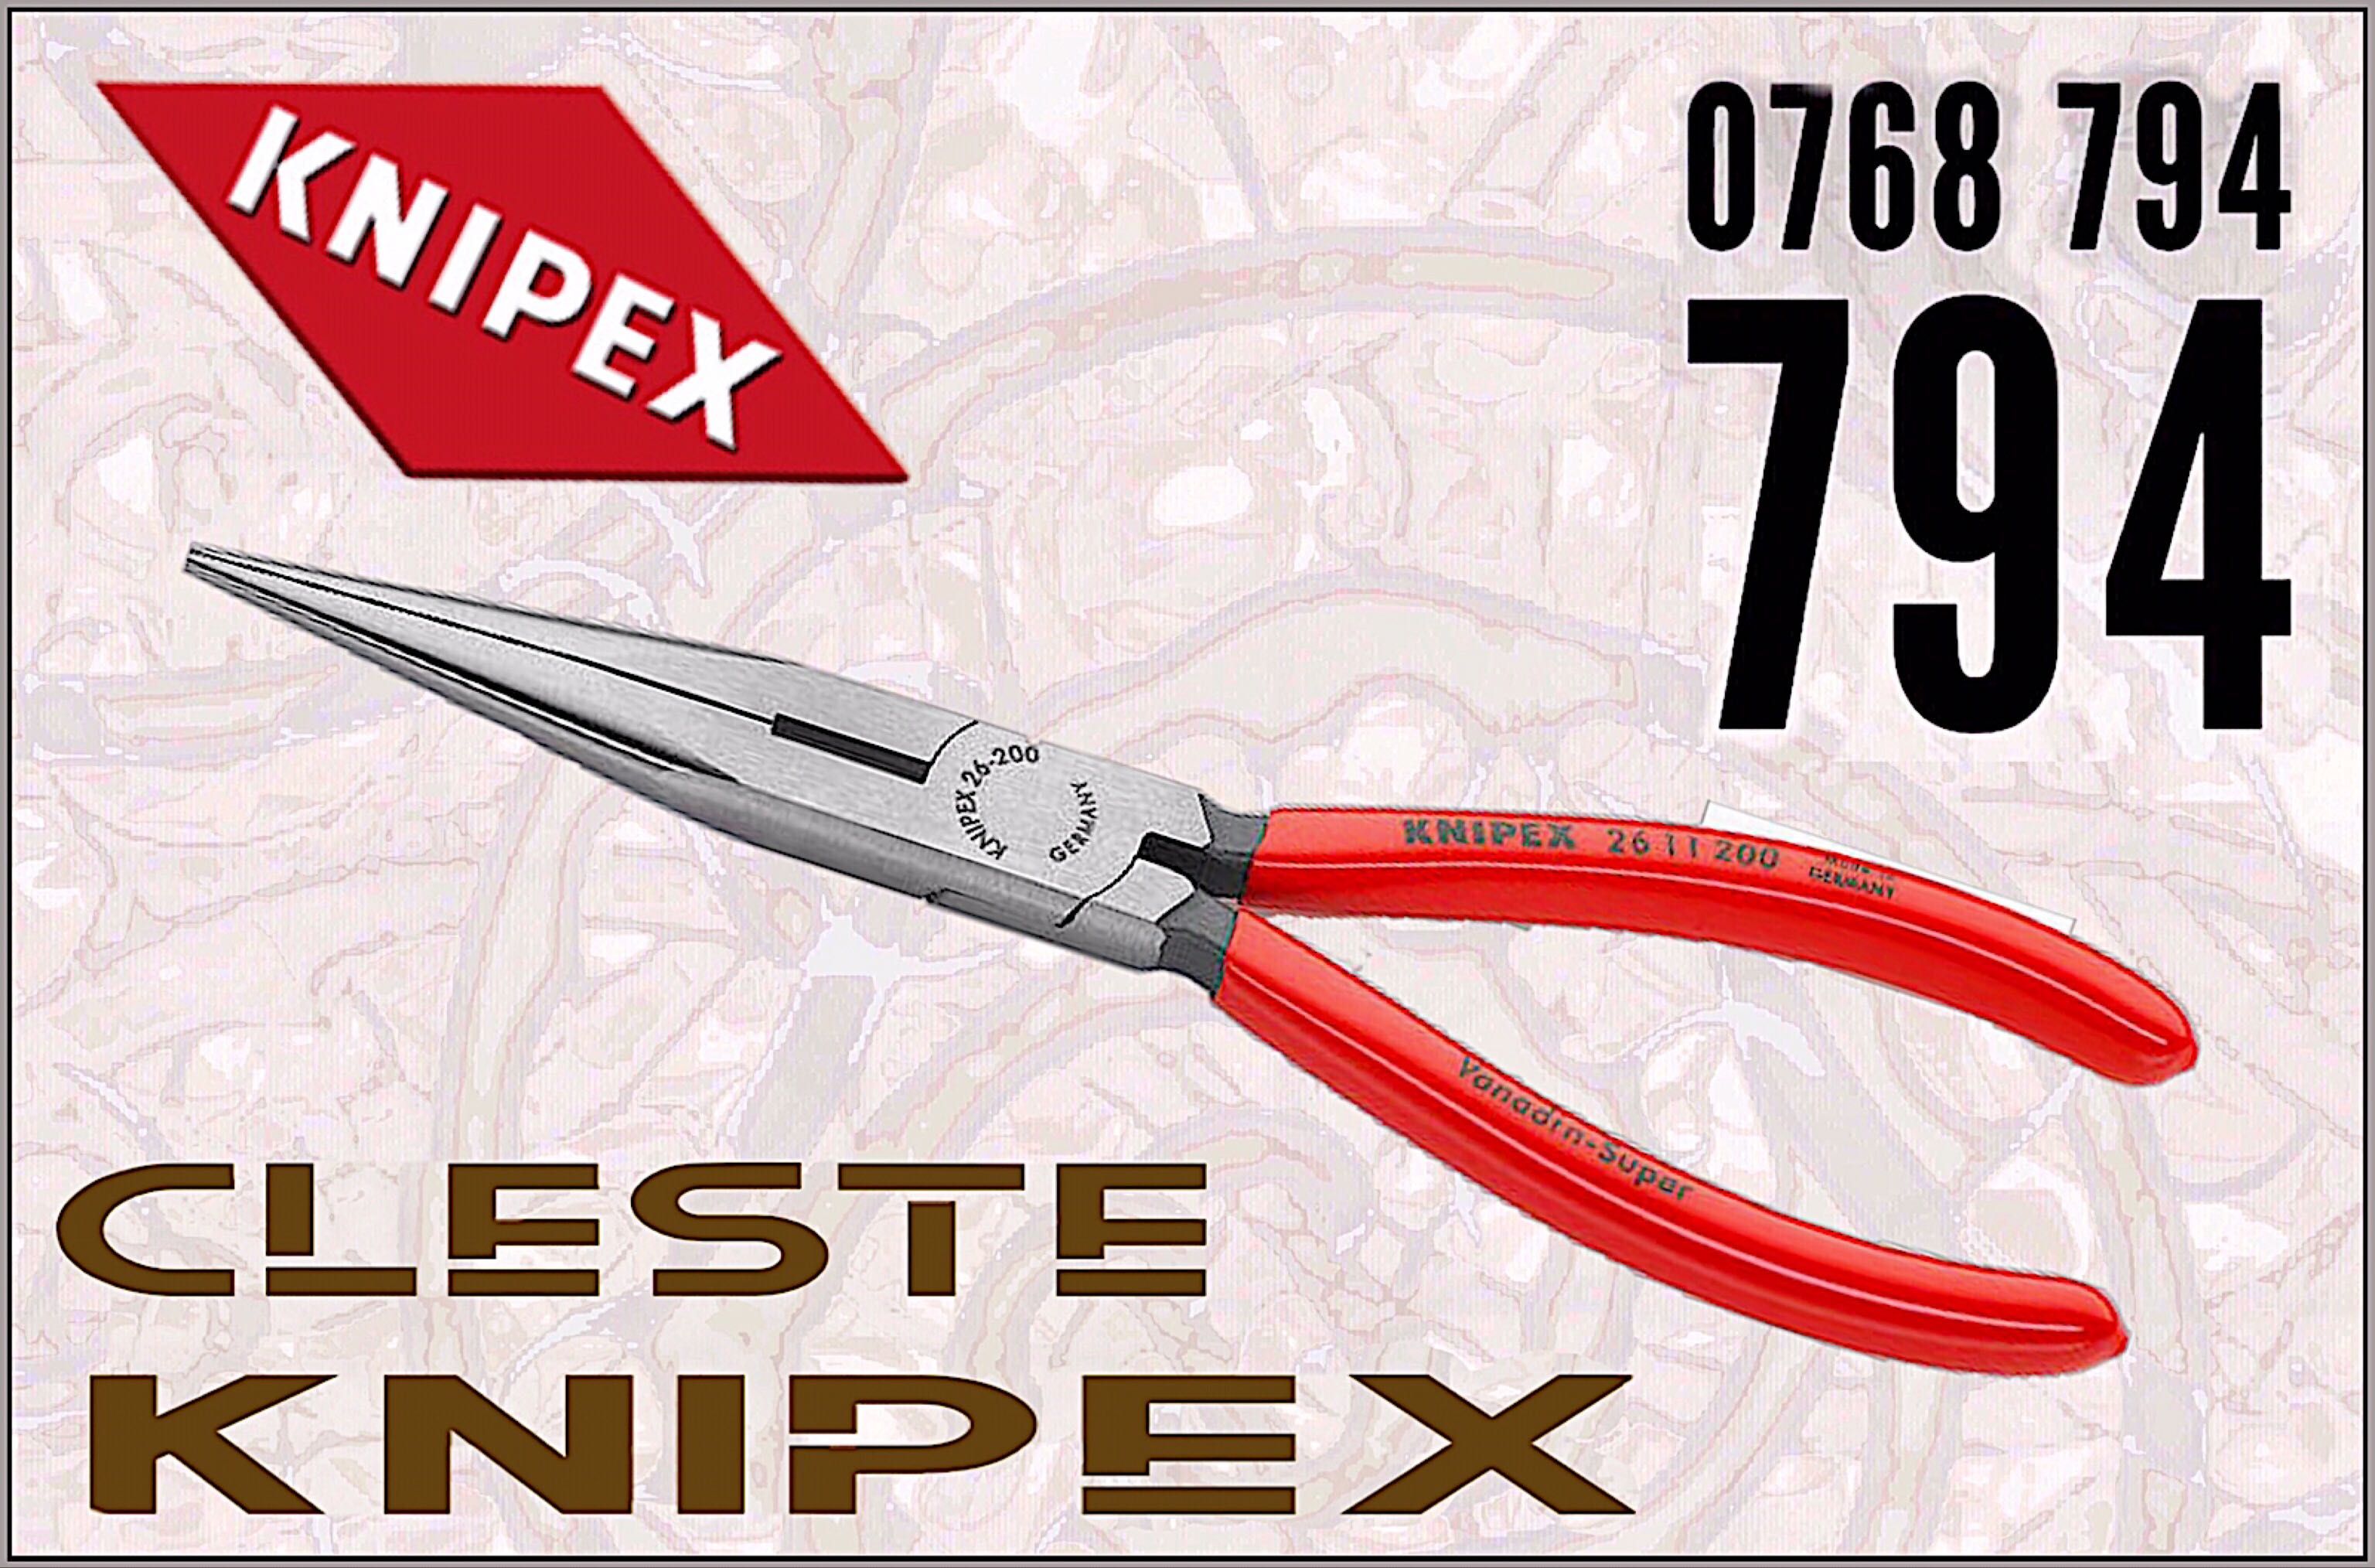 Cleste Knipex Unior